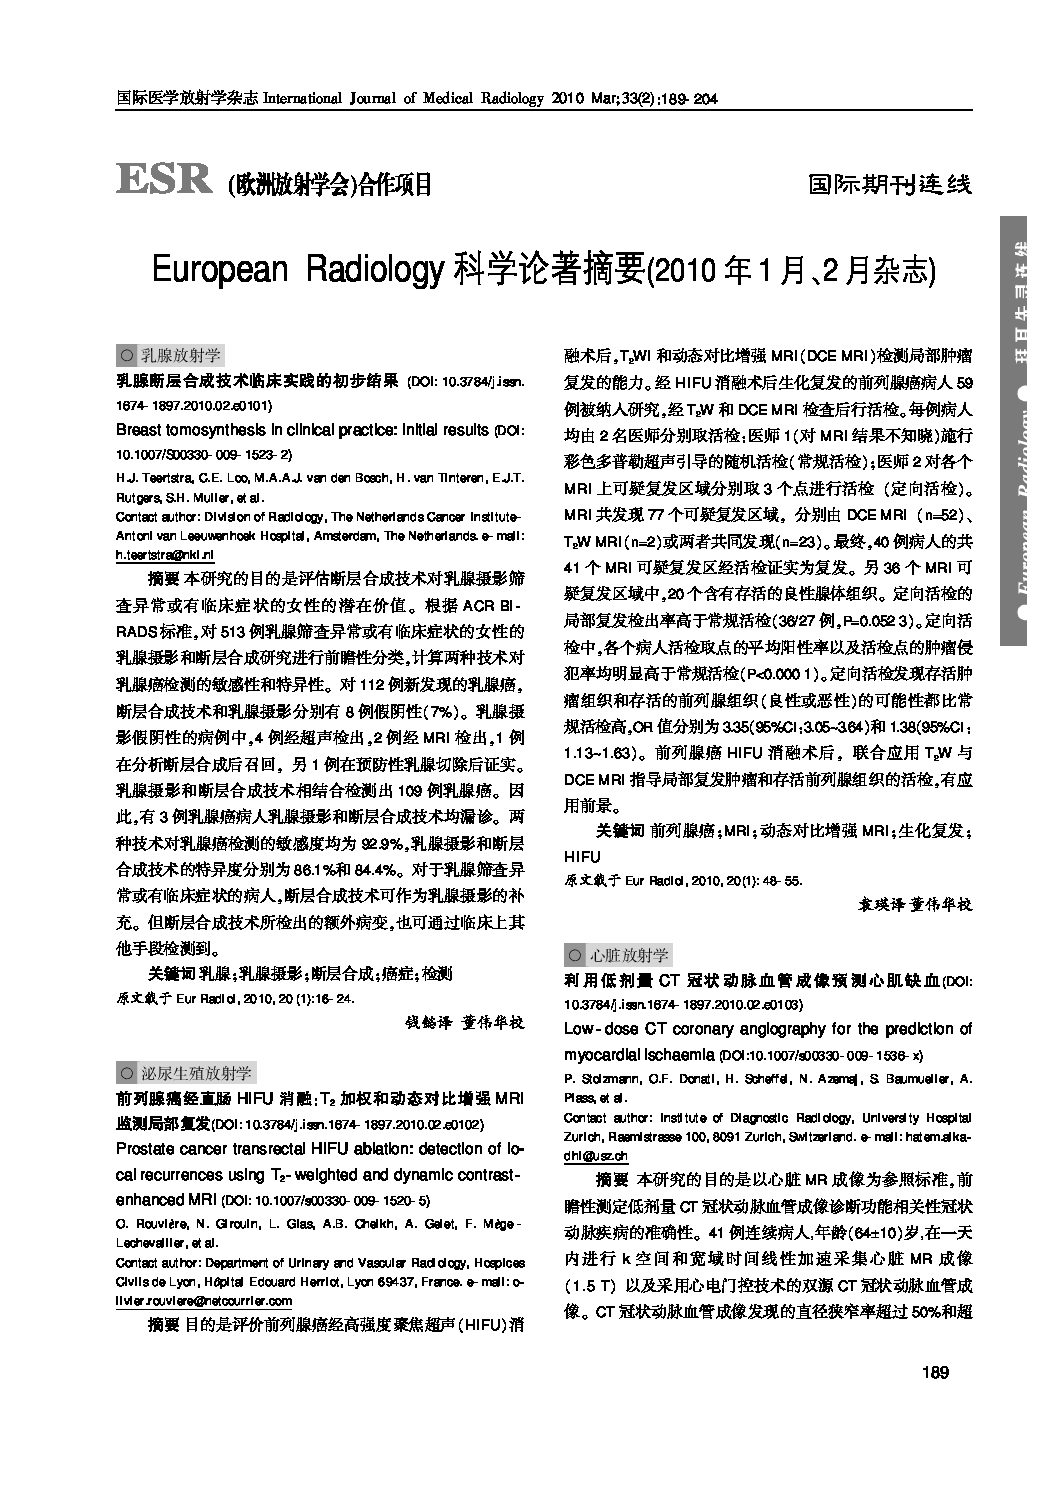 European Radiology Vol. 2010, January-February (0.8MB)